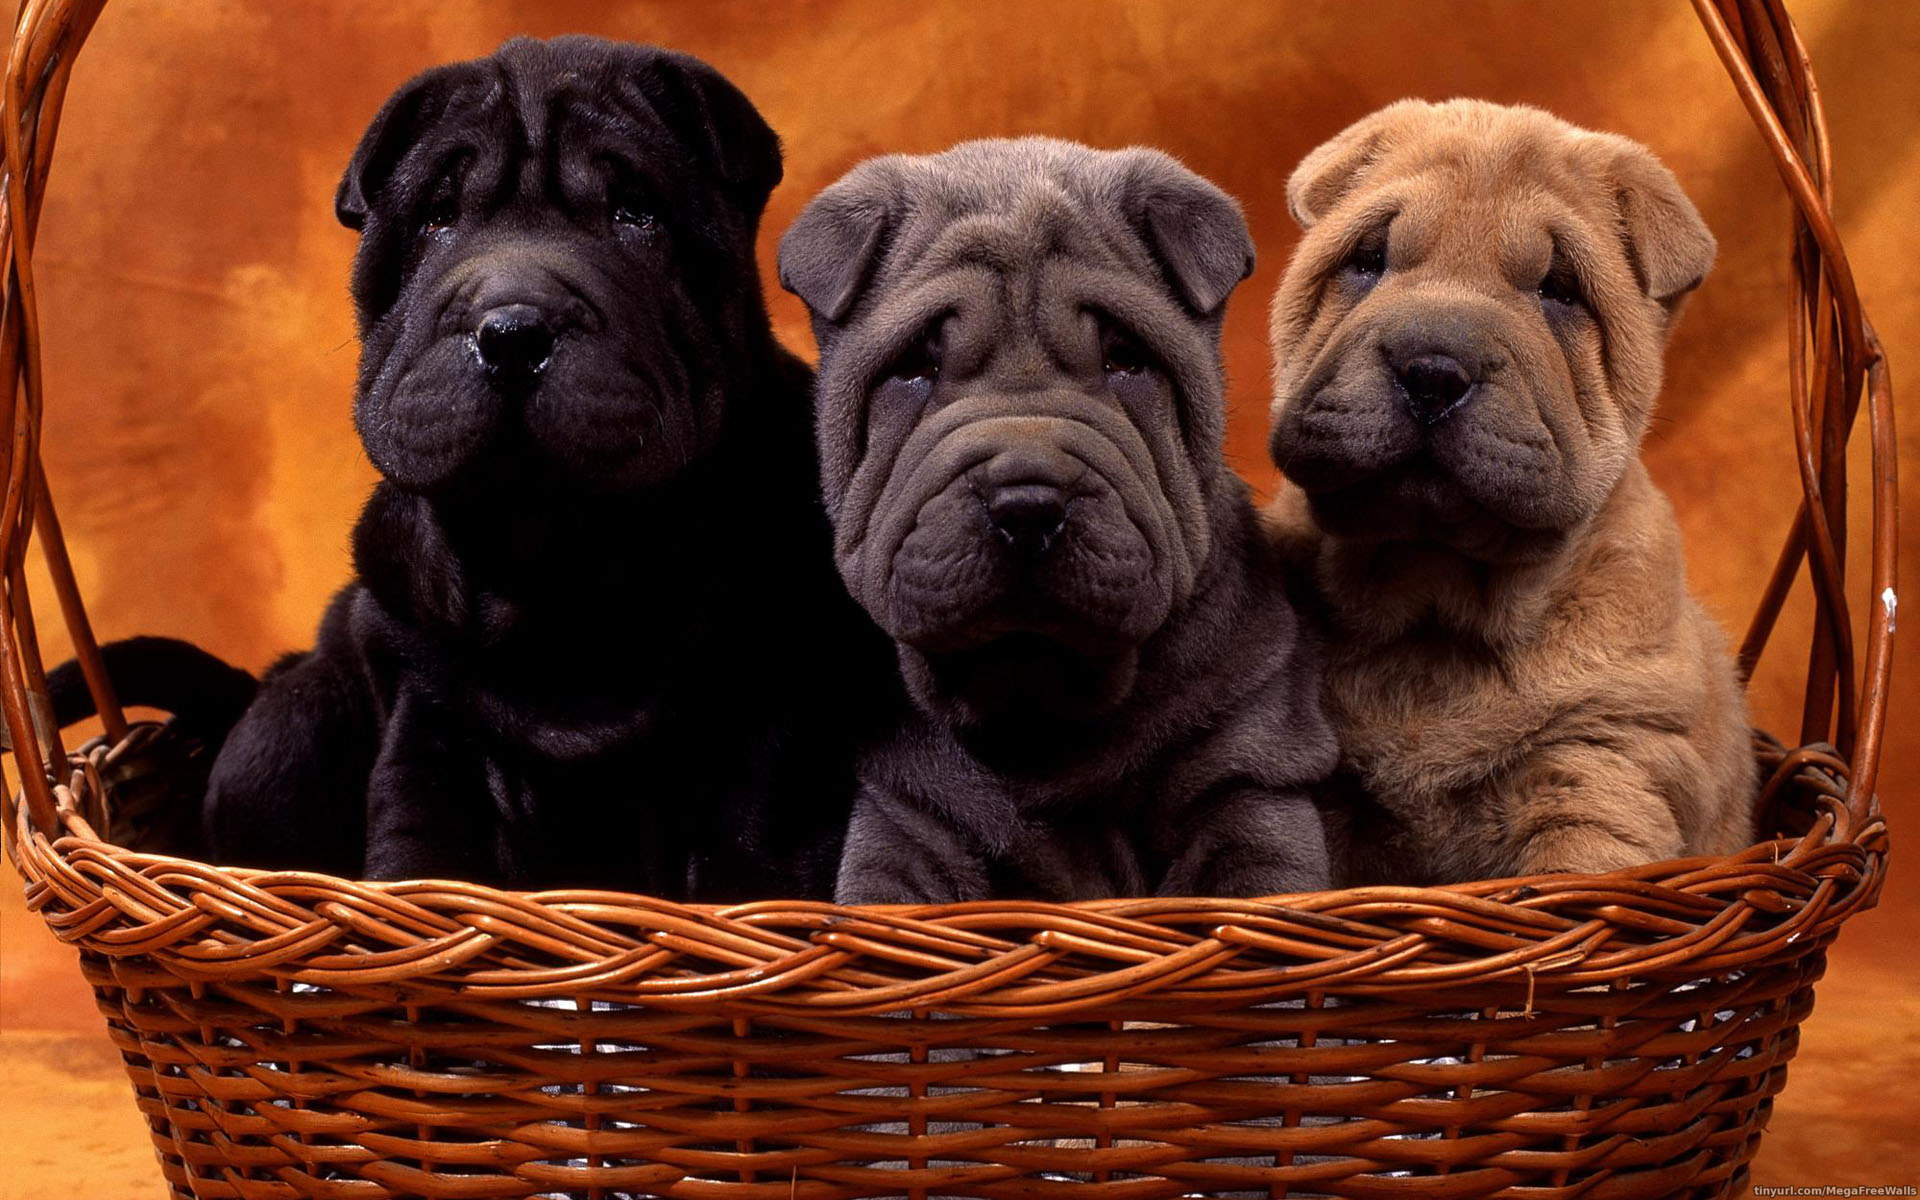 animal, shar pei, basket, cute, dog, puppy, dogs